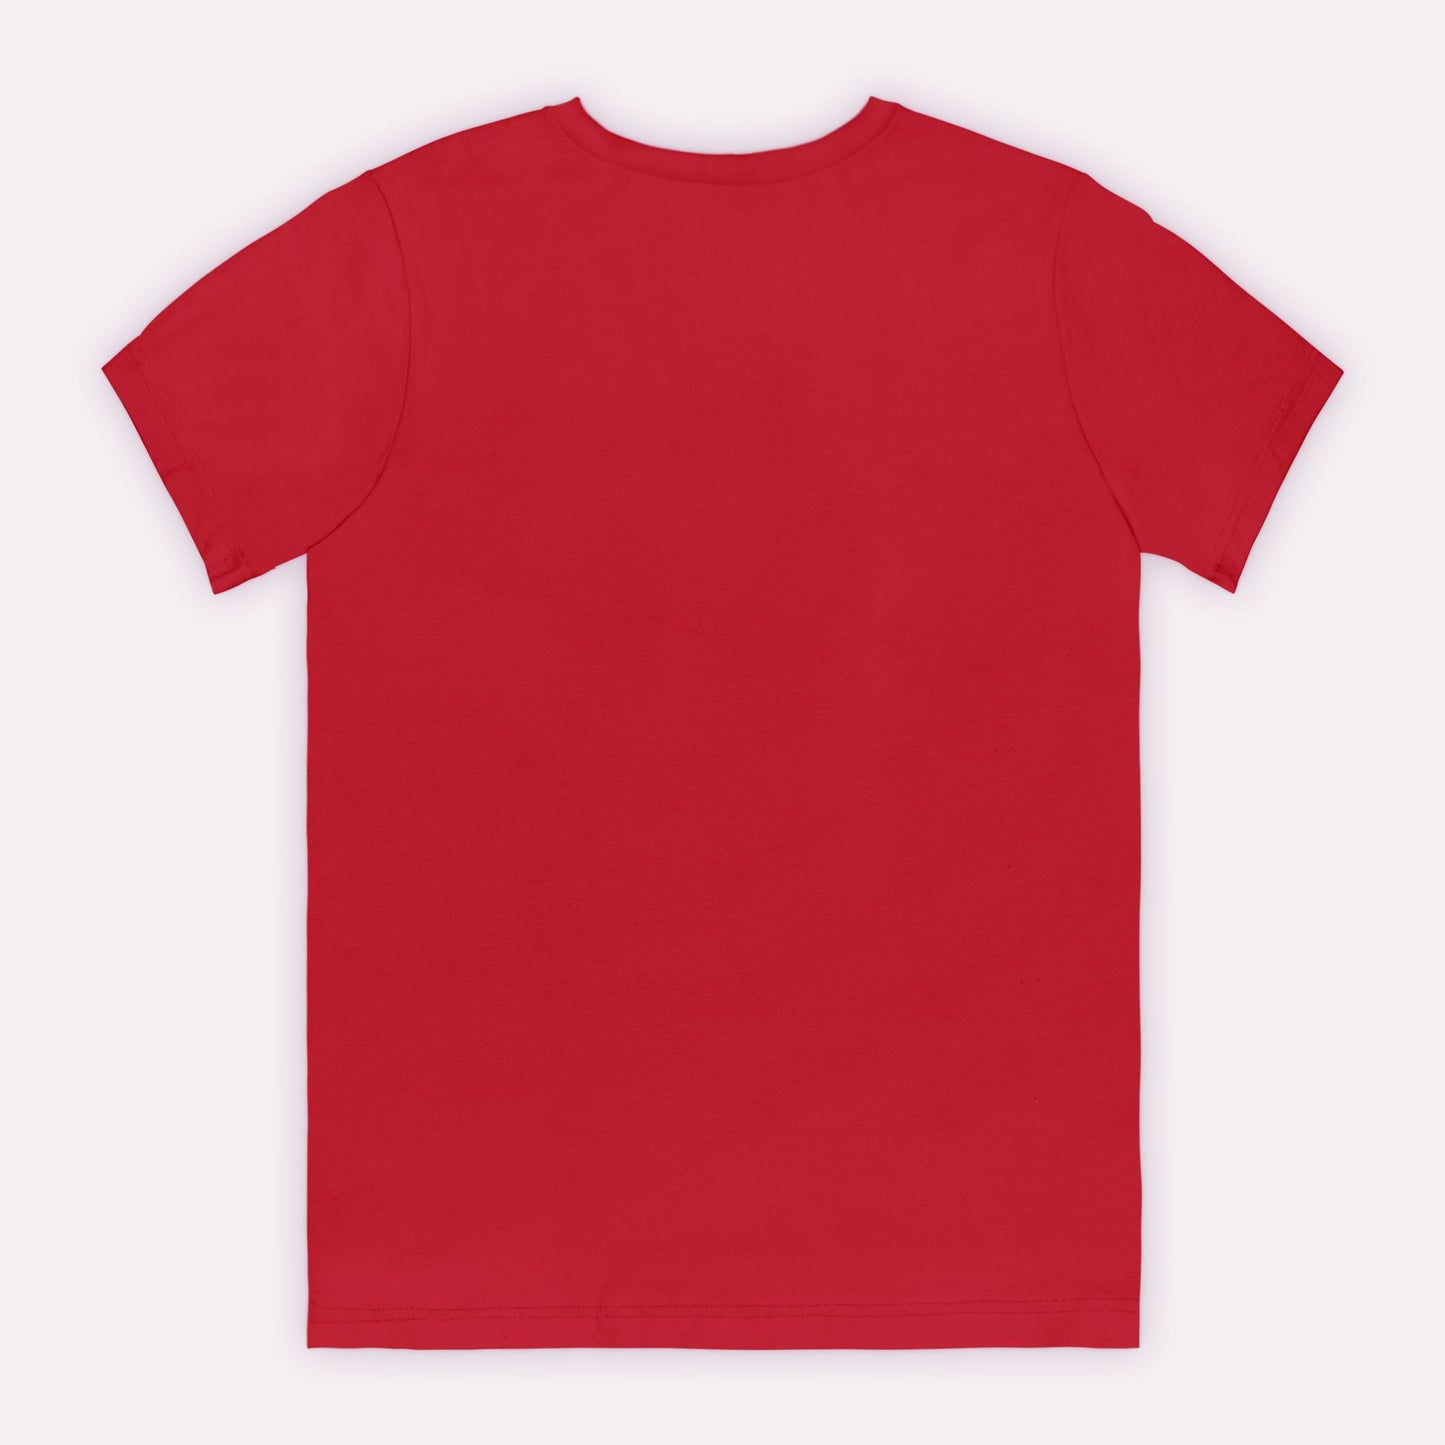 Logo Printed Unisex T-shirt 100% Cotton